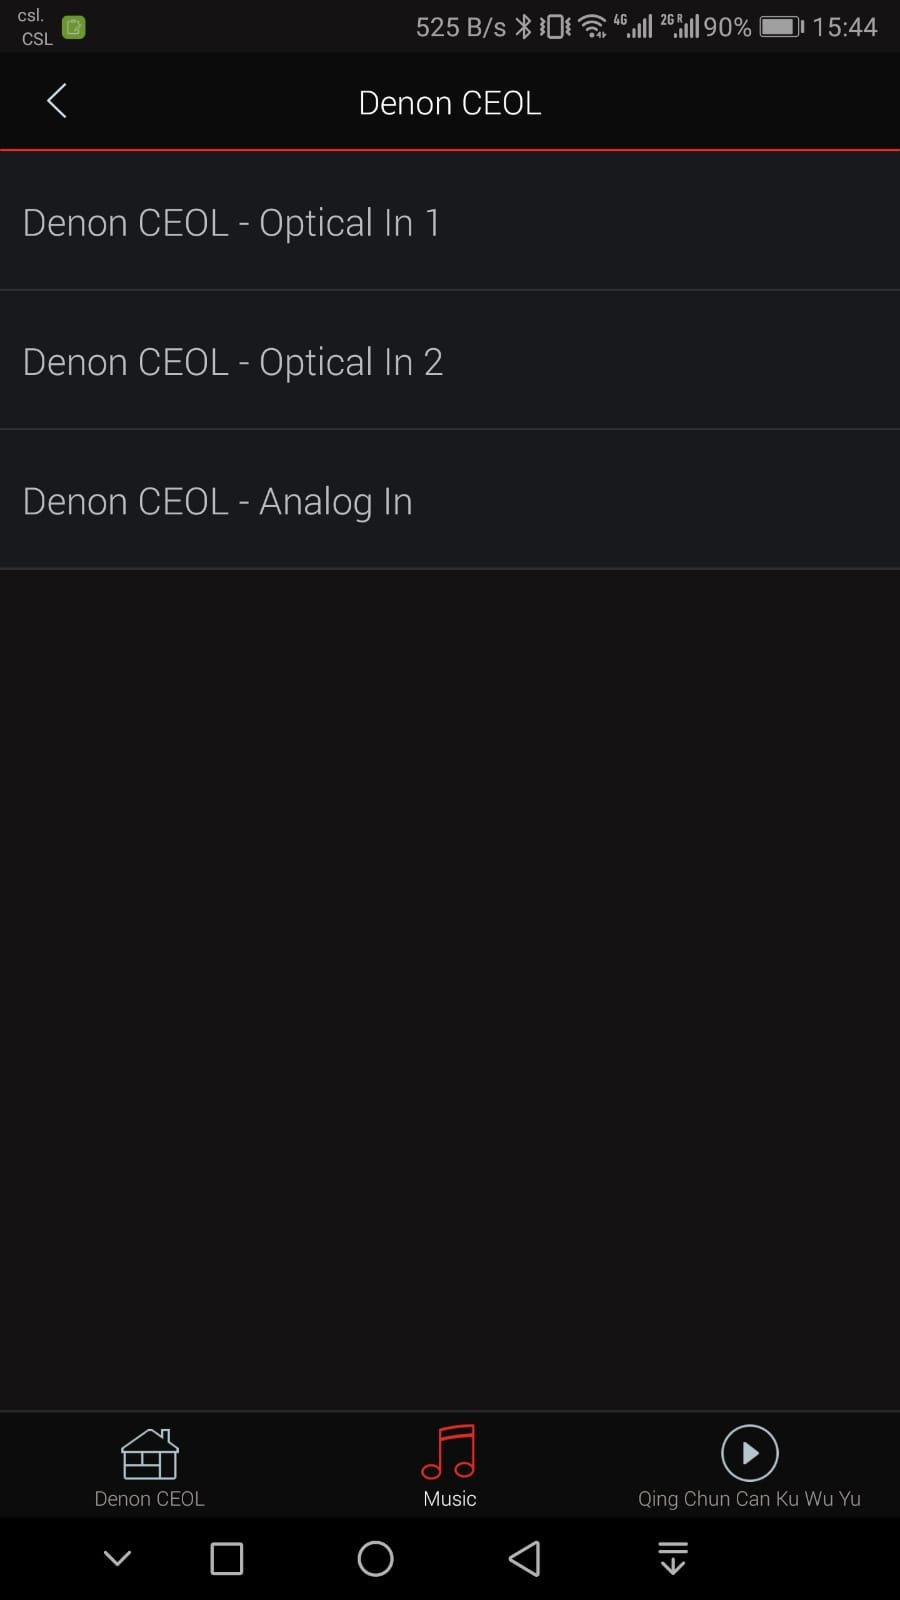 Denon 的 HEOS 功能在自家 AV 擴音機上面已經好普及，今次終於將這個實用功能應用到 CEOL 系列網絡 Hi-Fi 系統上面。最新的 CEOL N10 除了配備 HEOS 之外，還支援 AirPlay 2、藍牙、CD 播放、收音機及網絡收音機功能，配套喇叭都經過重新設計提升音質，可以話係一次幾全面的升級。